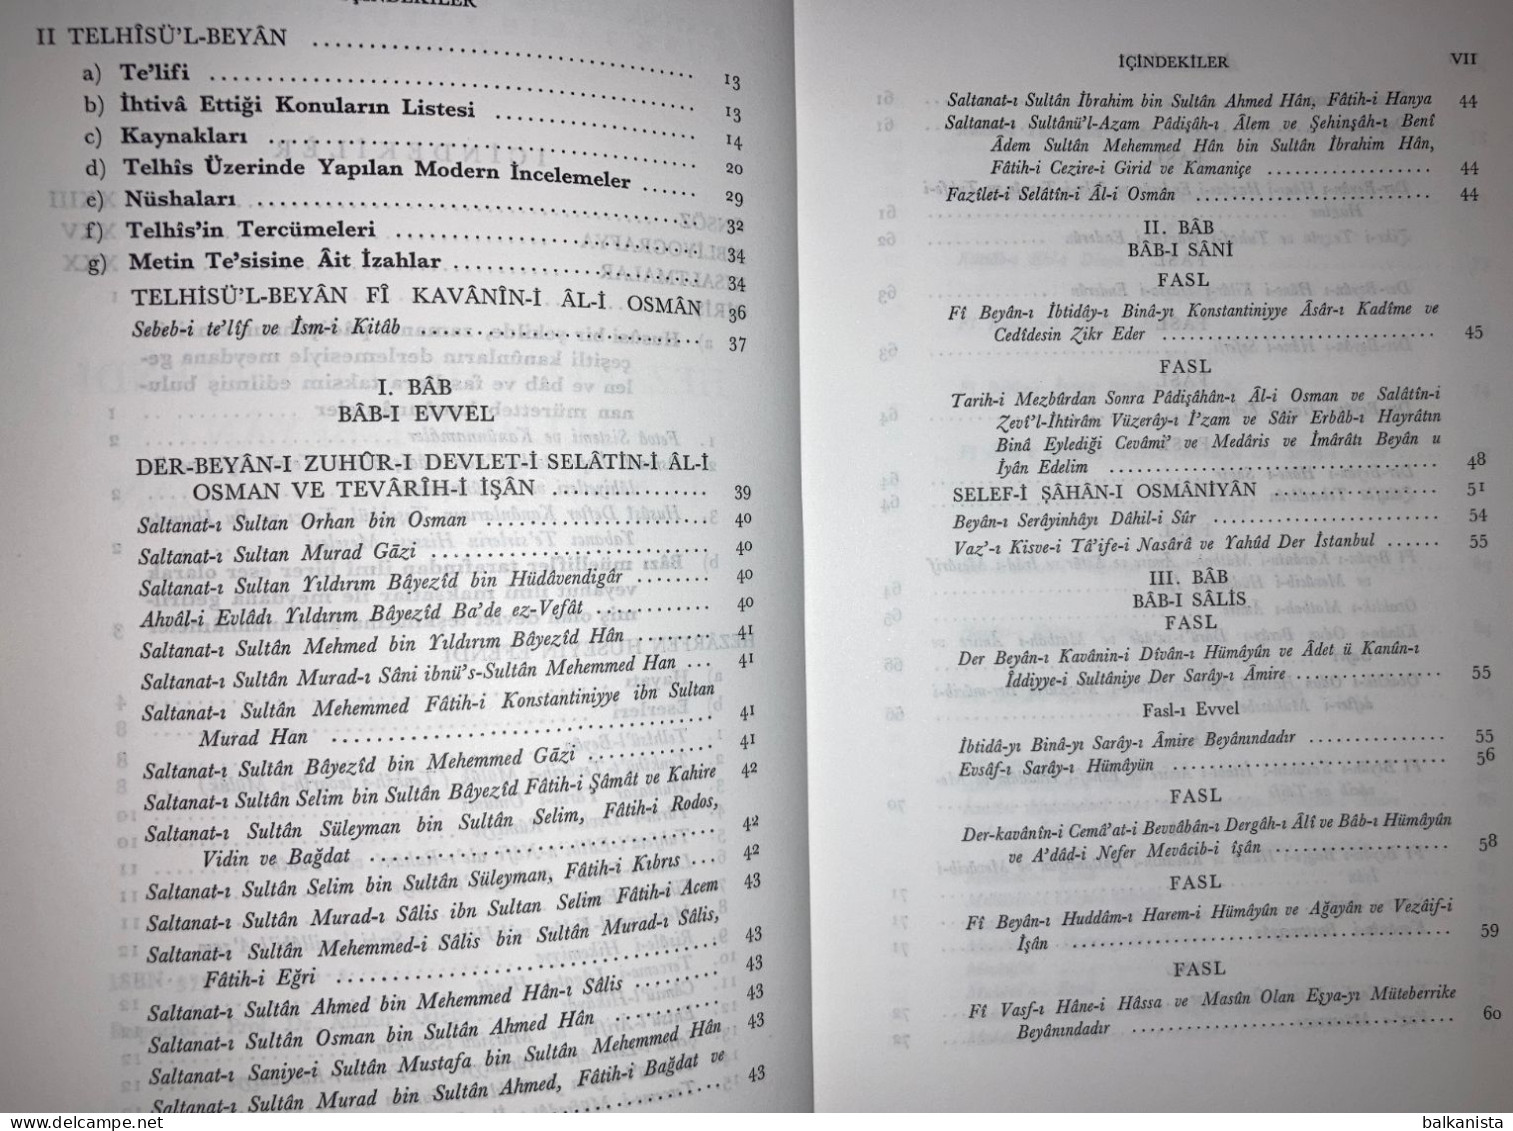 Telhisu'l Beyan Fi Kavanin-i Al-i Osman Ottoman Turkish History - Midden-Oosten